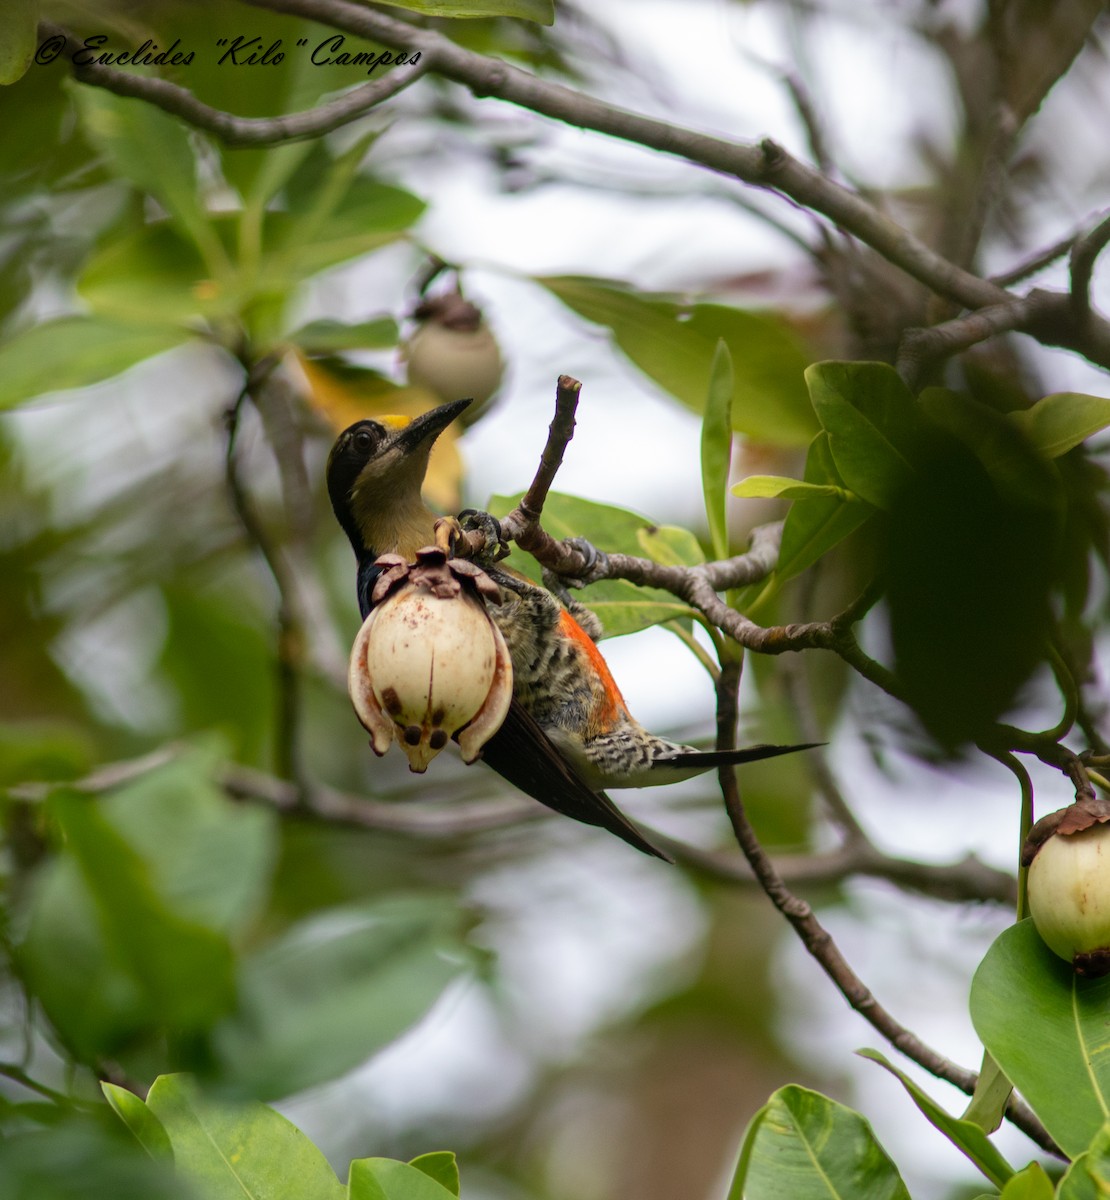 Golden-naped Woodpecker - Euclides "Kilo" Campos